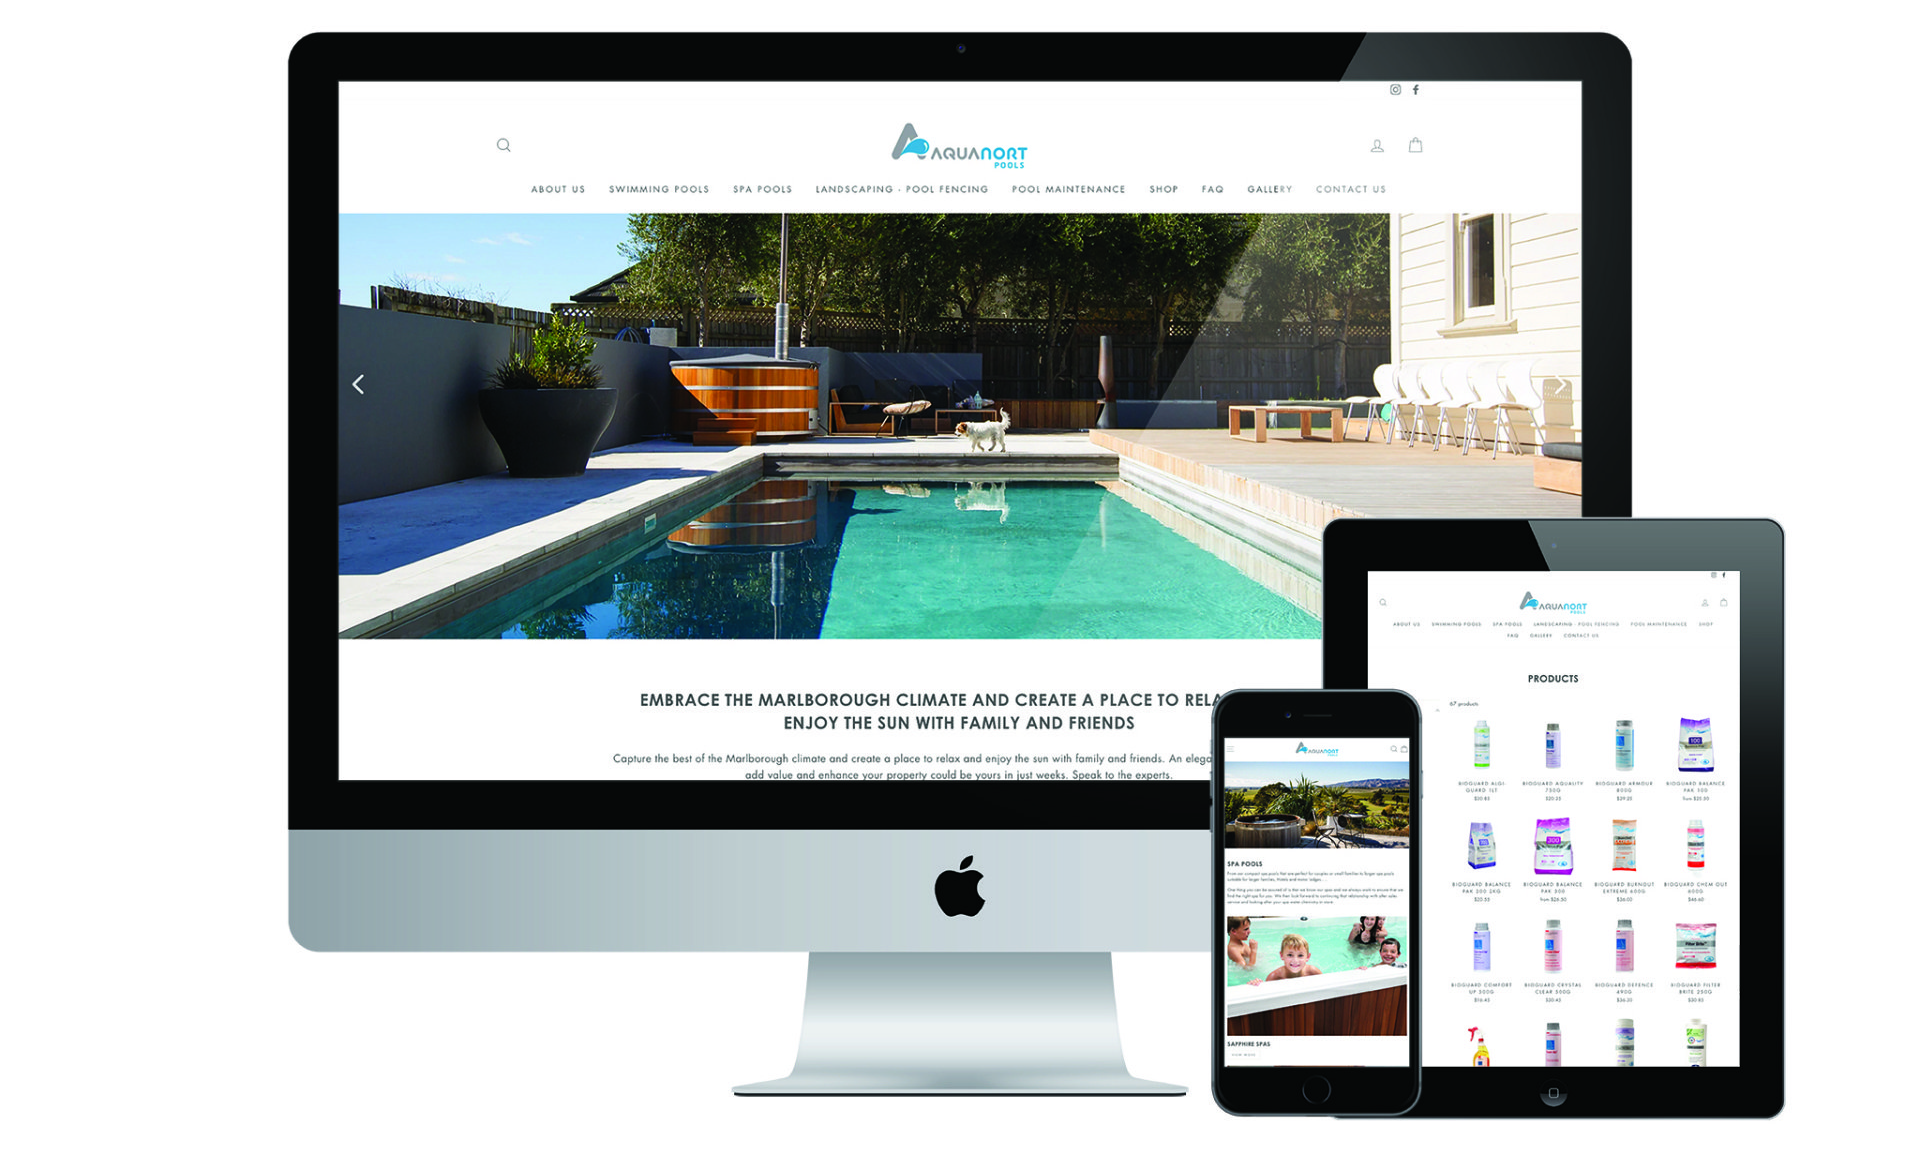 Aquanort Pools website designed by Vanilla Hayes creative graphic design  studio in Blenheim, Marlborough, New Zealand